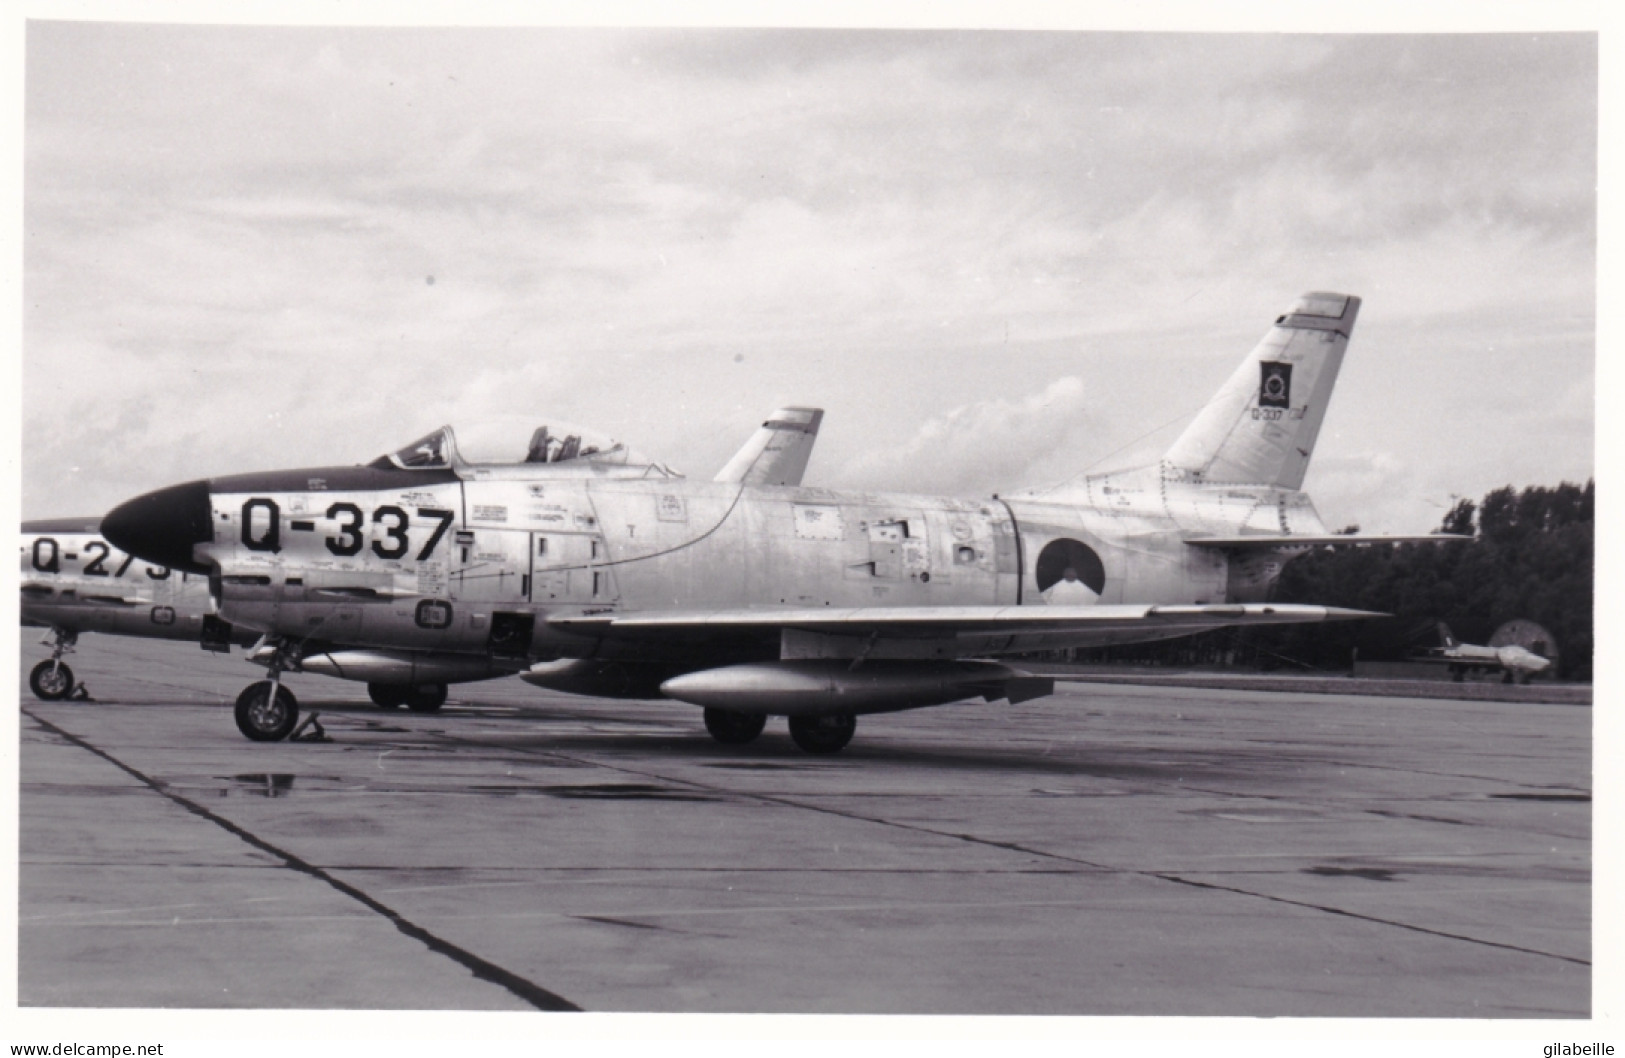 Photo Originale - Aviation - Militaria - Avion North American F-86 Sabre - Luftfahrt